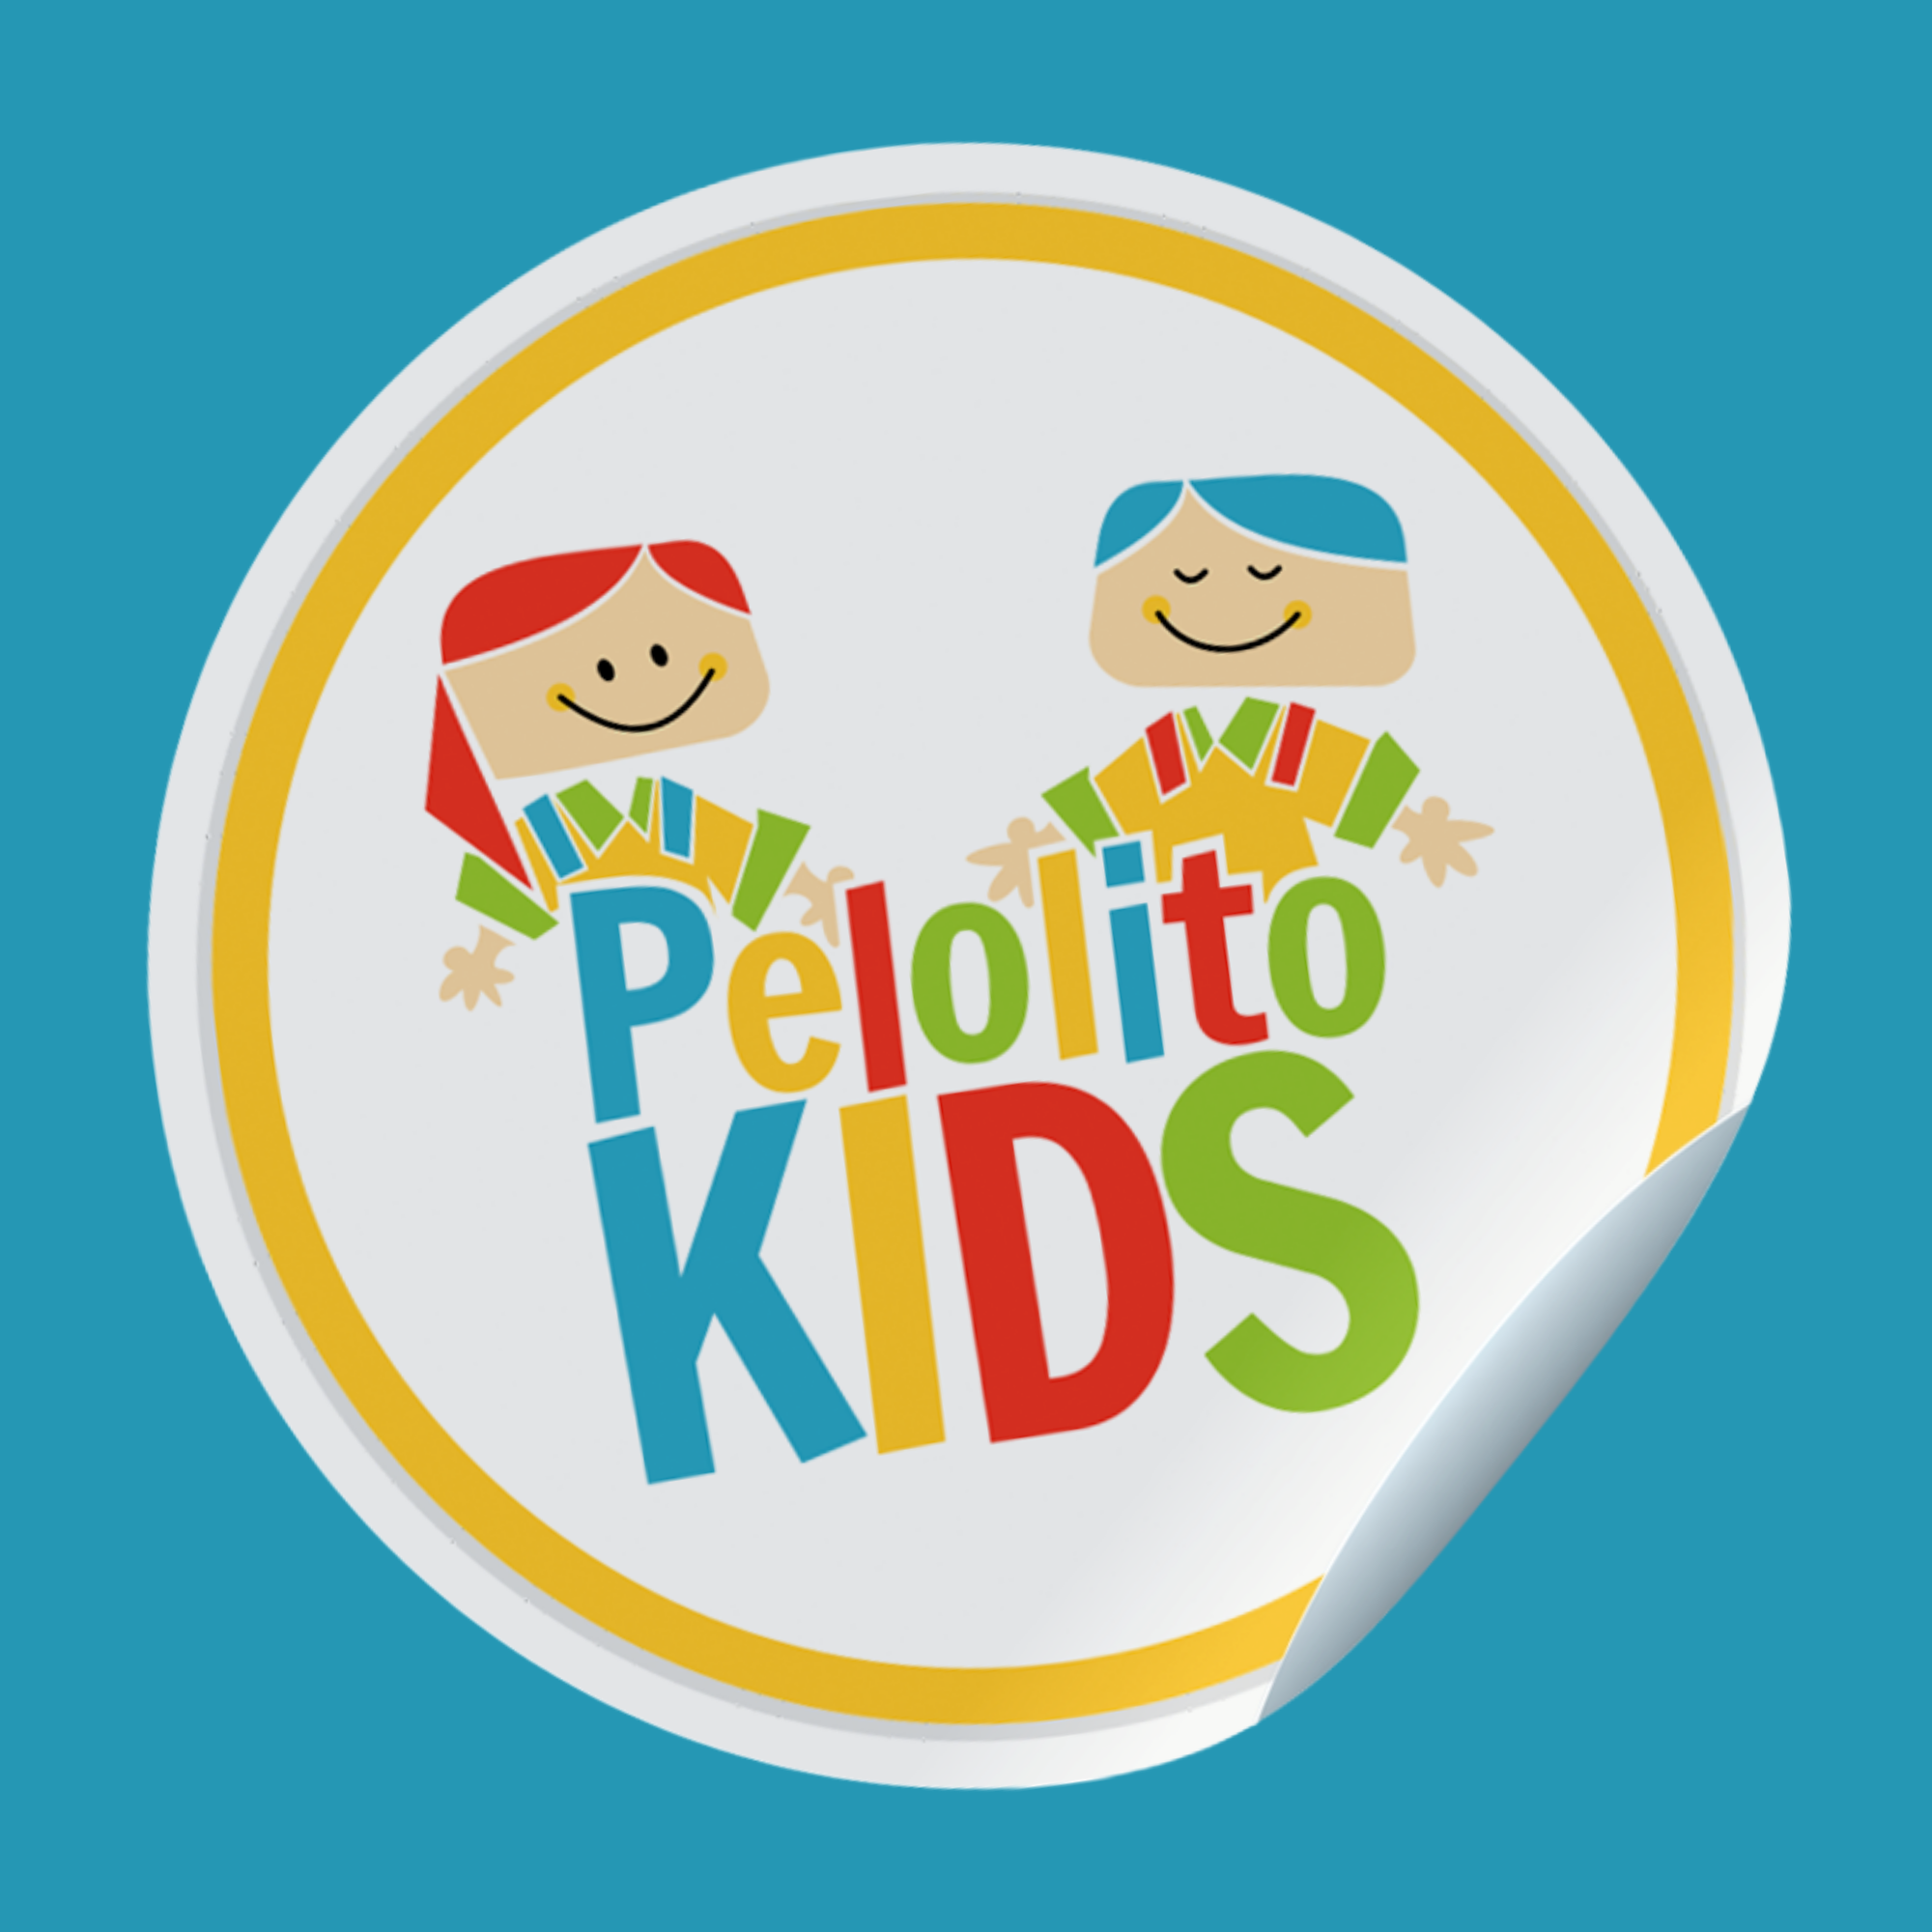 Etiqueta Pelolito Kids